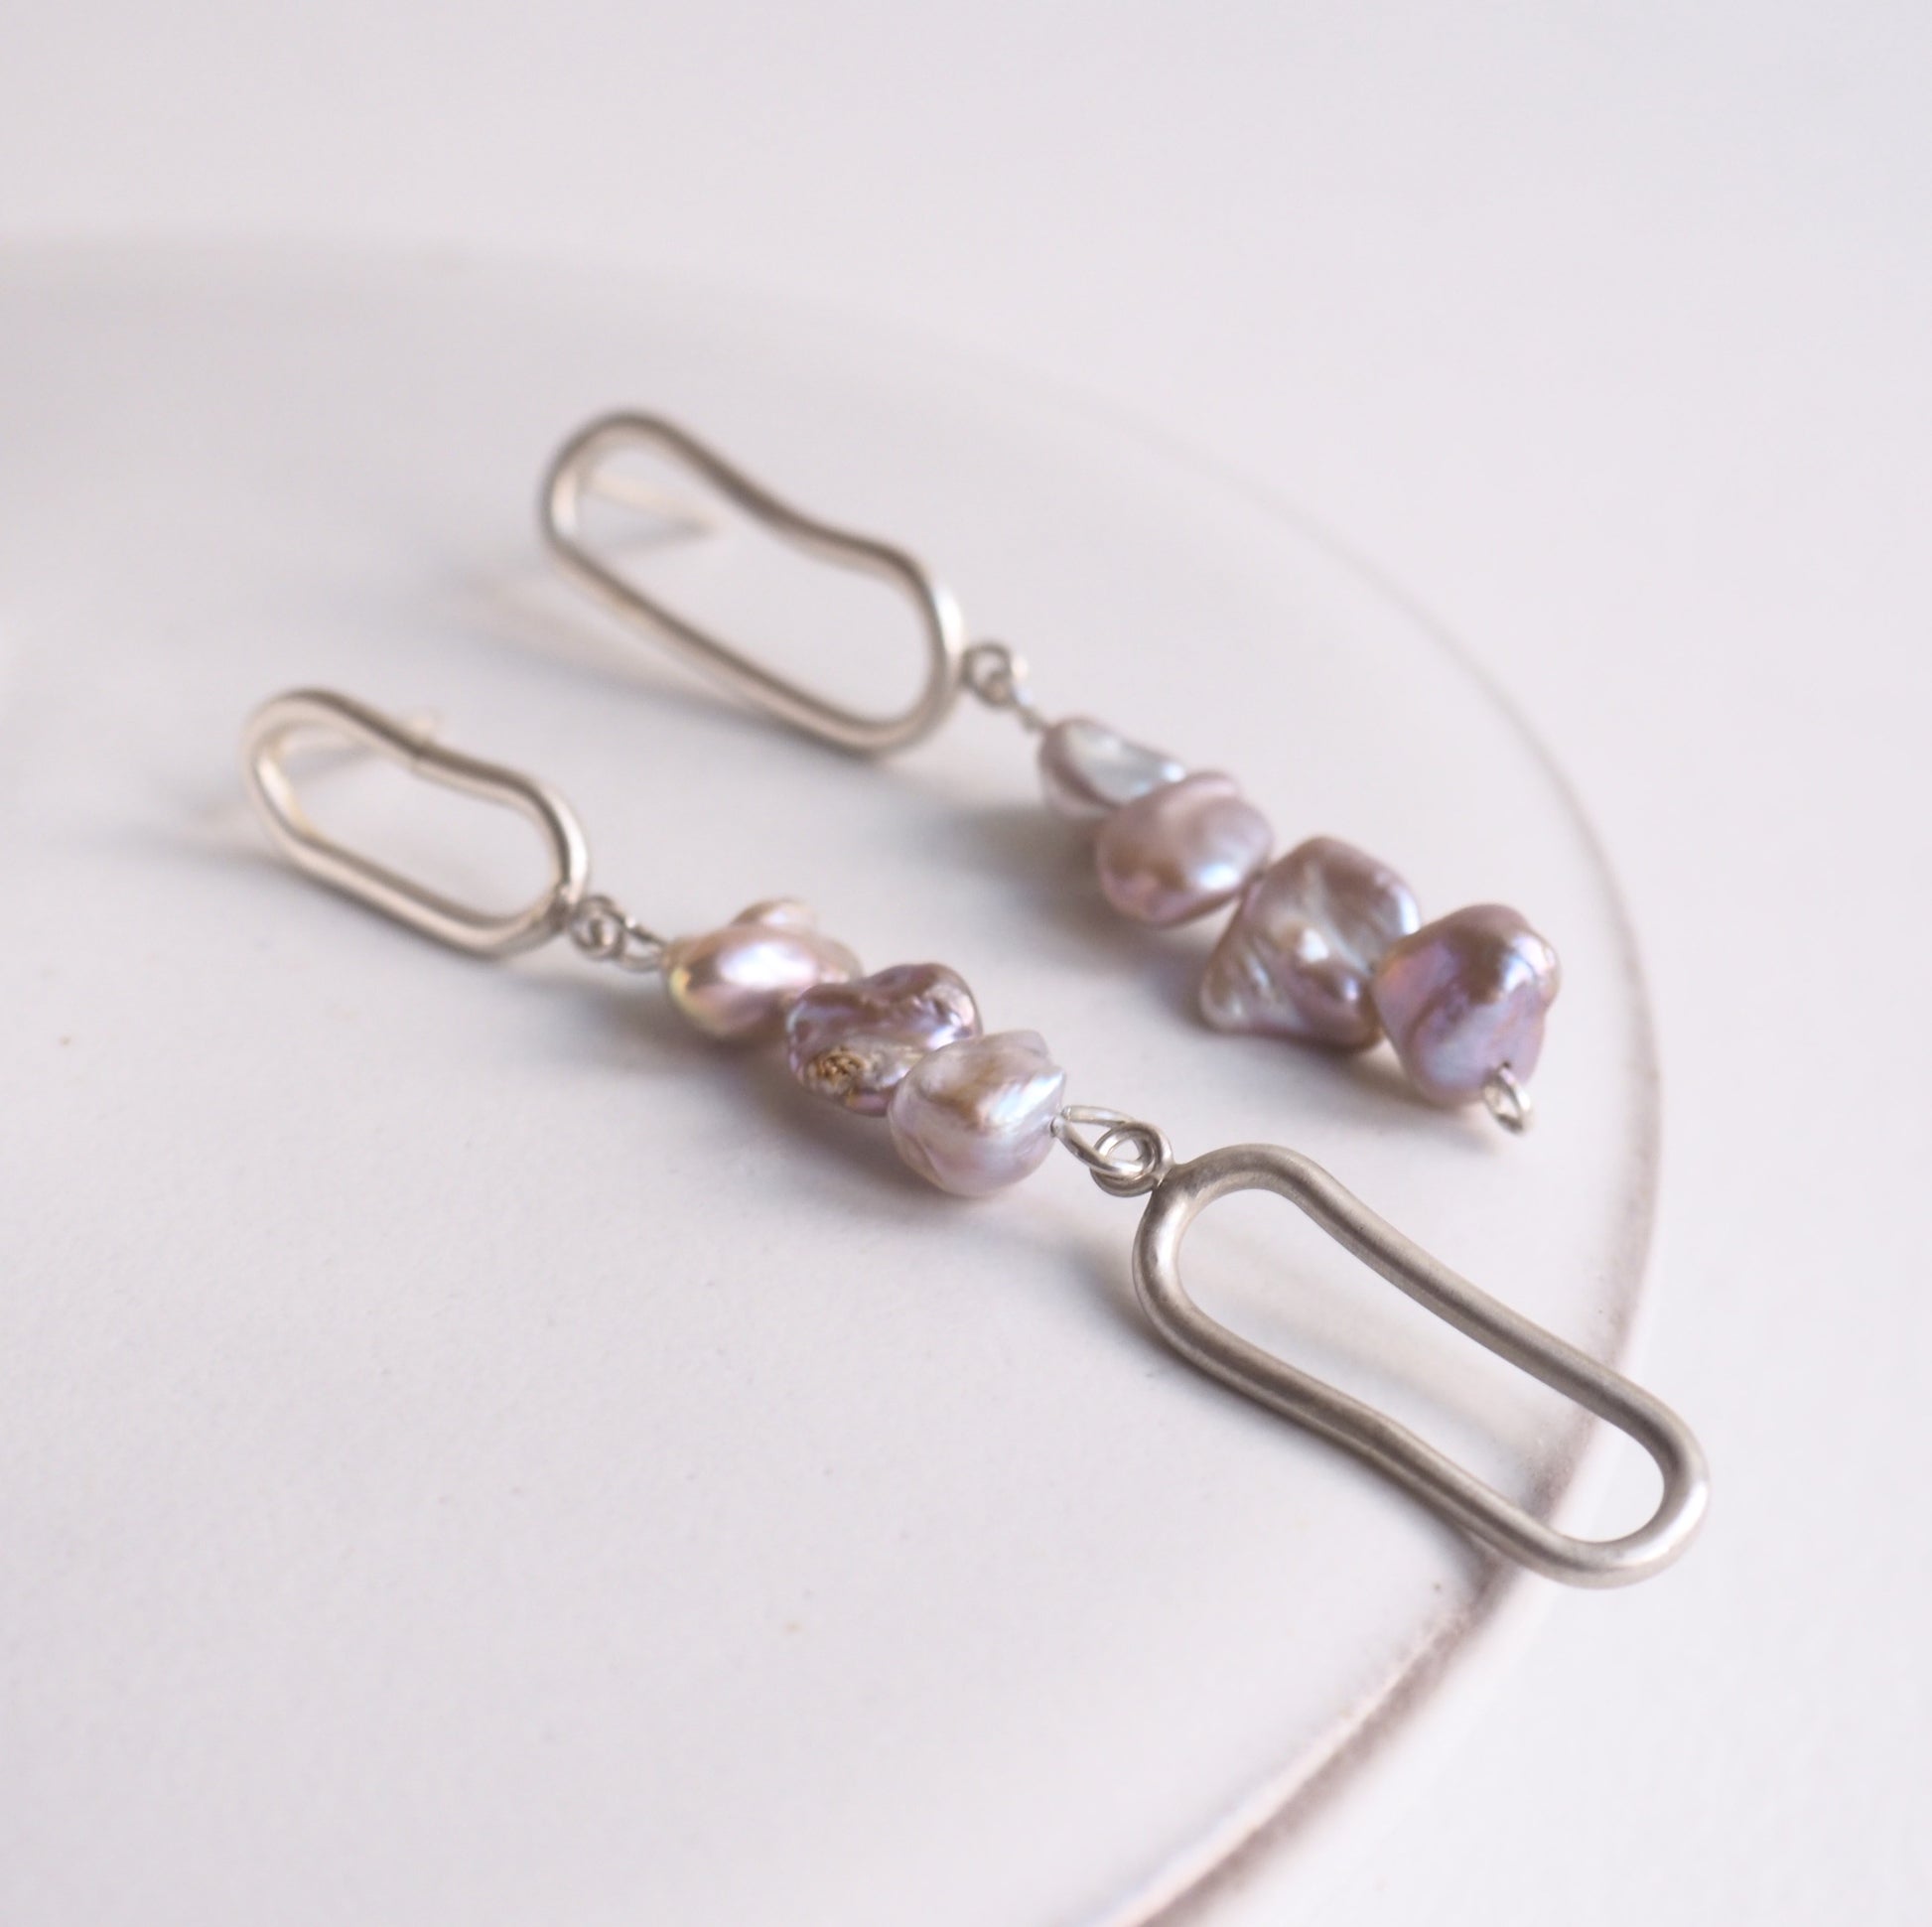 earrings pearl unique Silver Jewelry handcrafted handmade fashion bespoke custom design